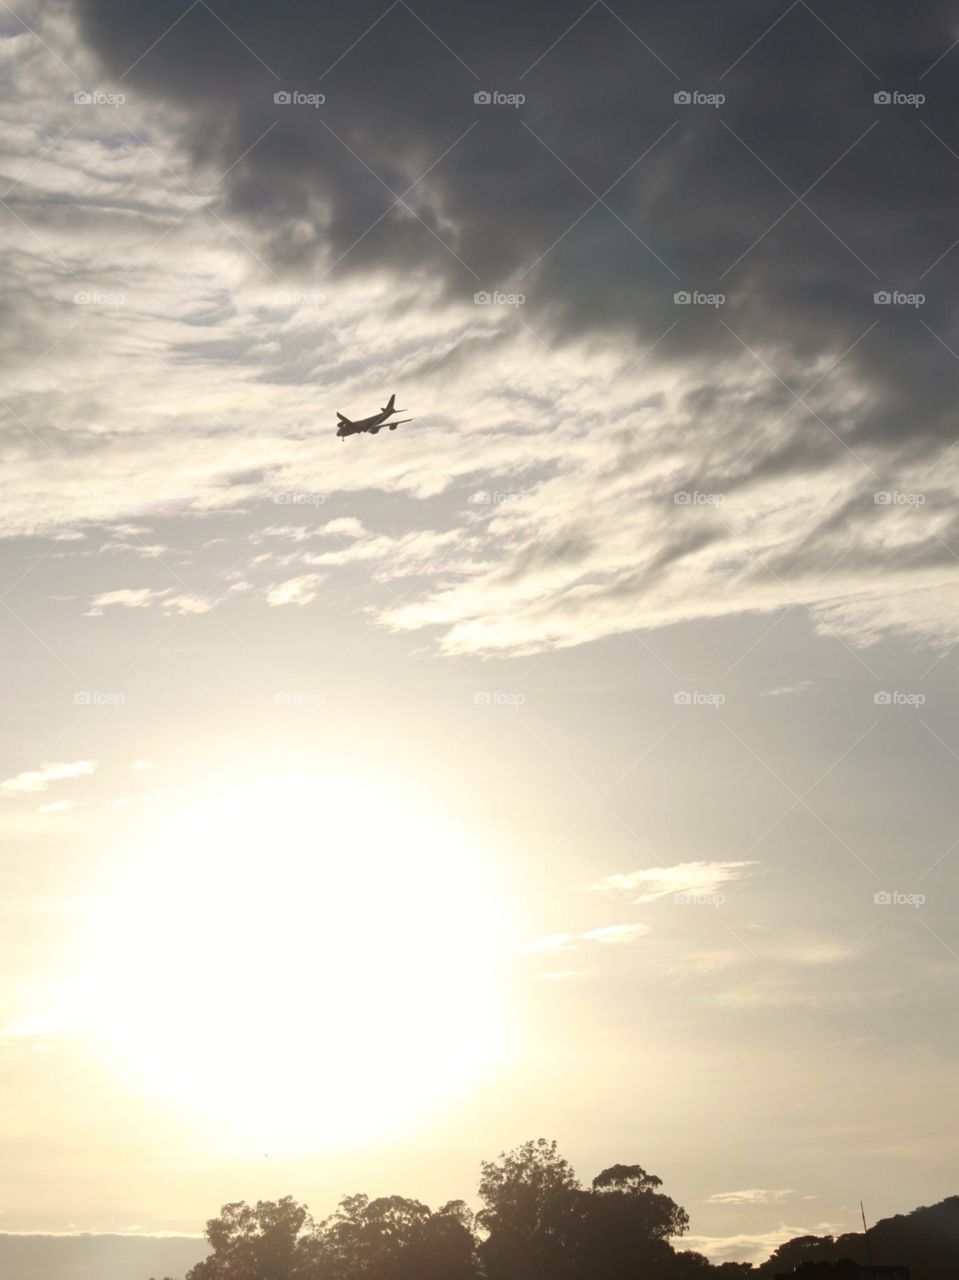 airplane over the sun

#airplane #aviation #aircraft #plane #instagramaviation #boeing #airport #aviationlovers #airbus #pilot #planespotting #sunshine #sunrise #aviationgeek #planeporn #aviationphotography #flight #planespotter #avporn #boeinglovers